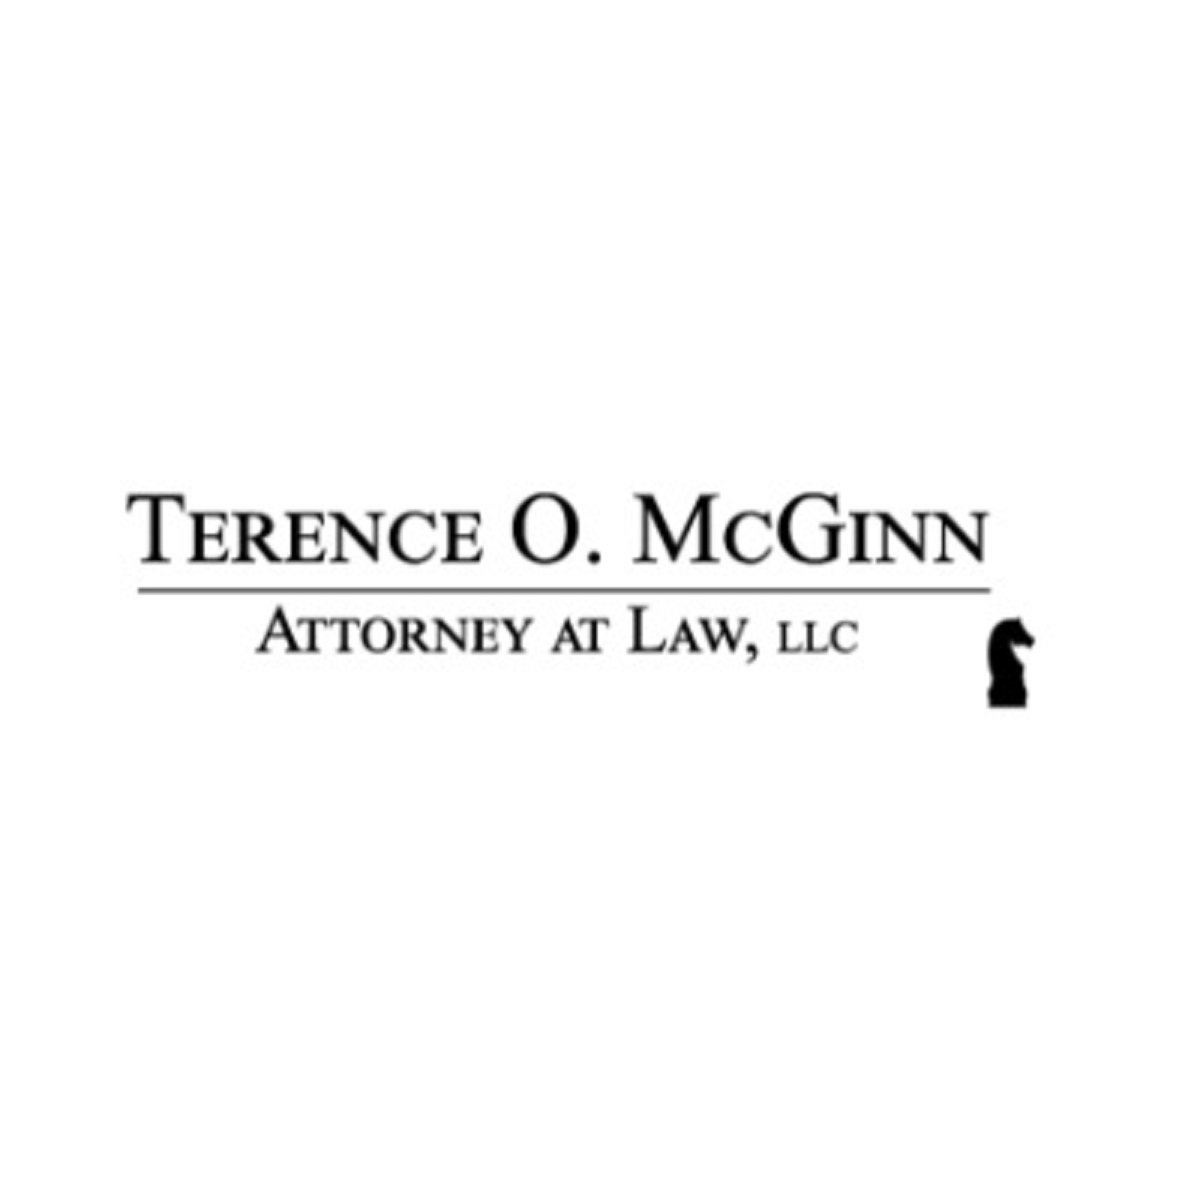 McGinn Law Cover Image